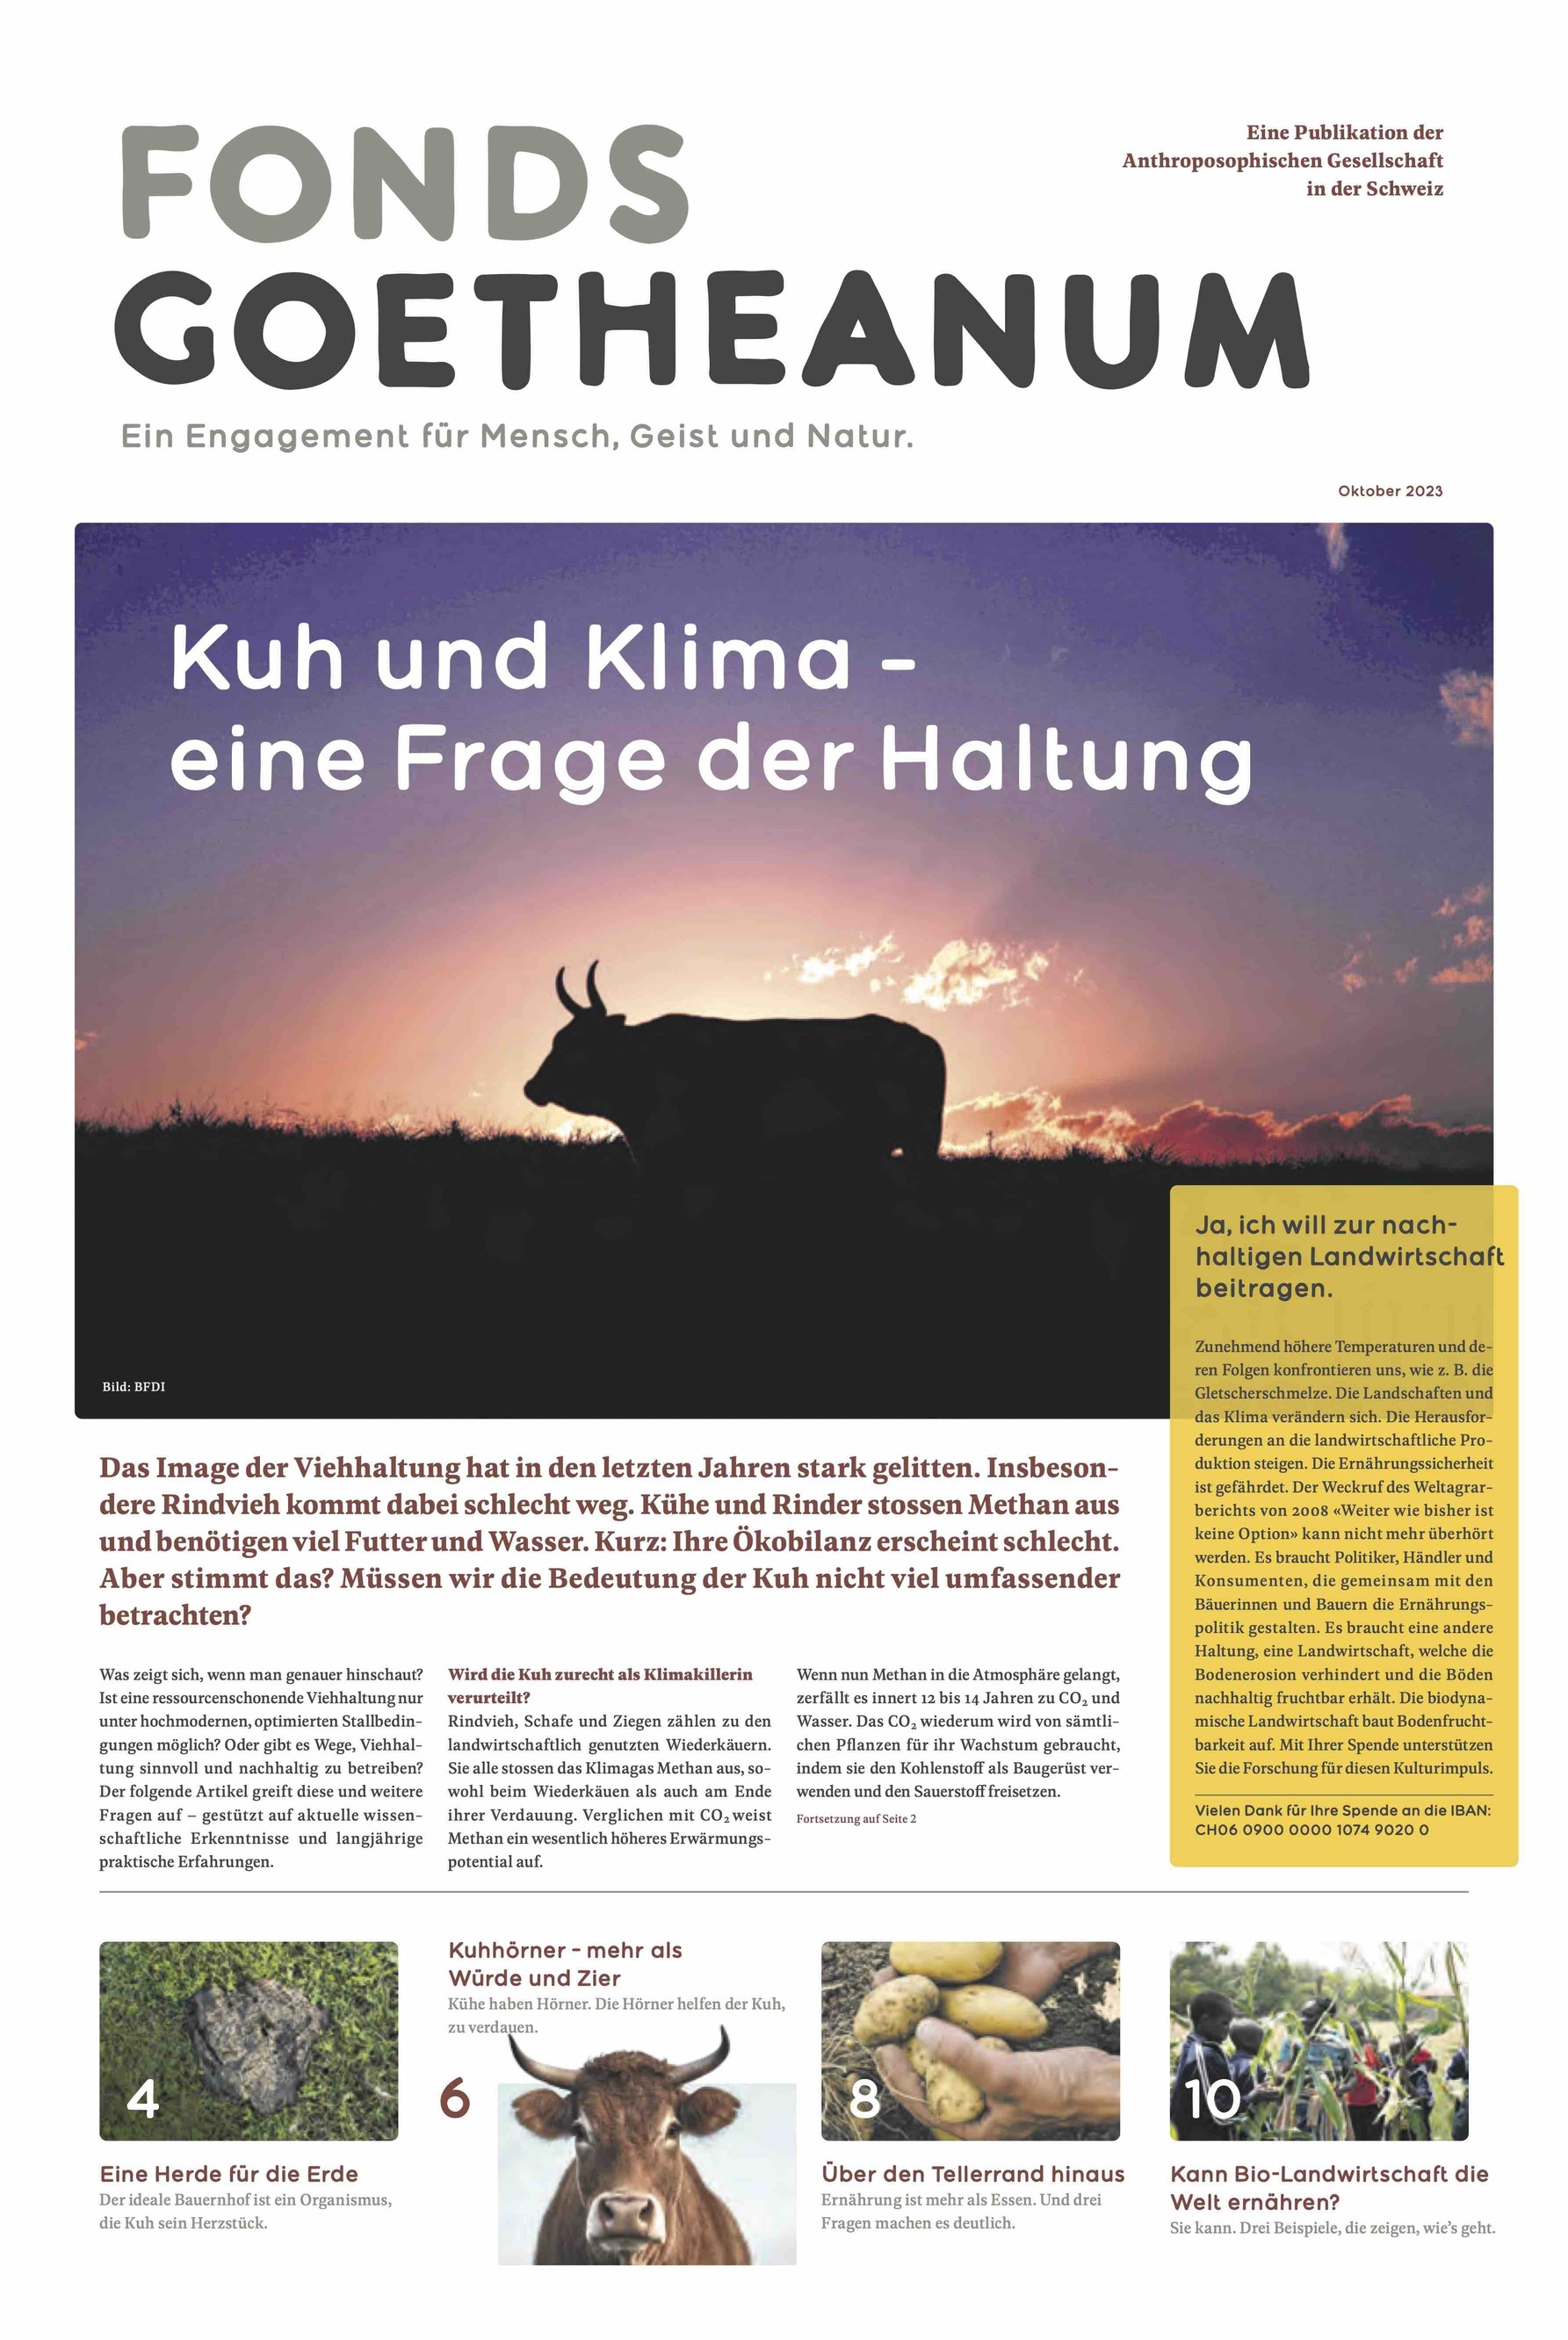 Kuh und Klima (ongoing translation)